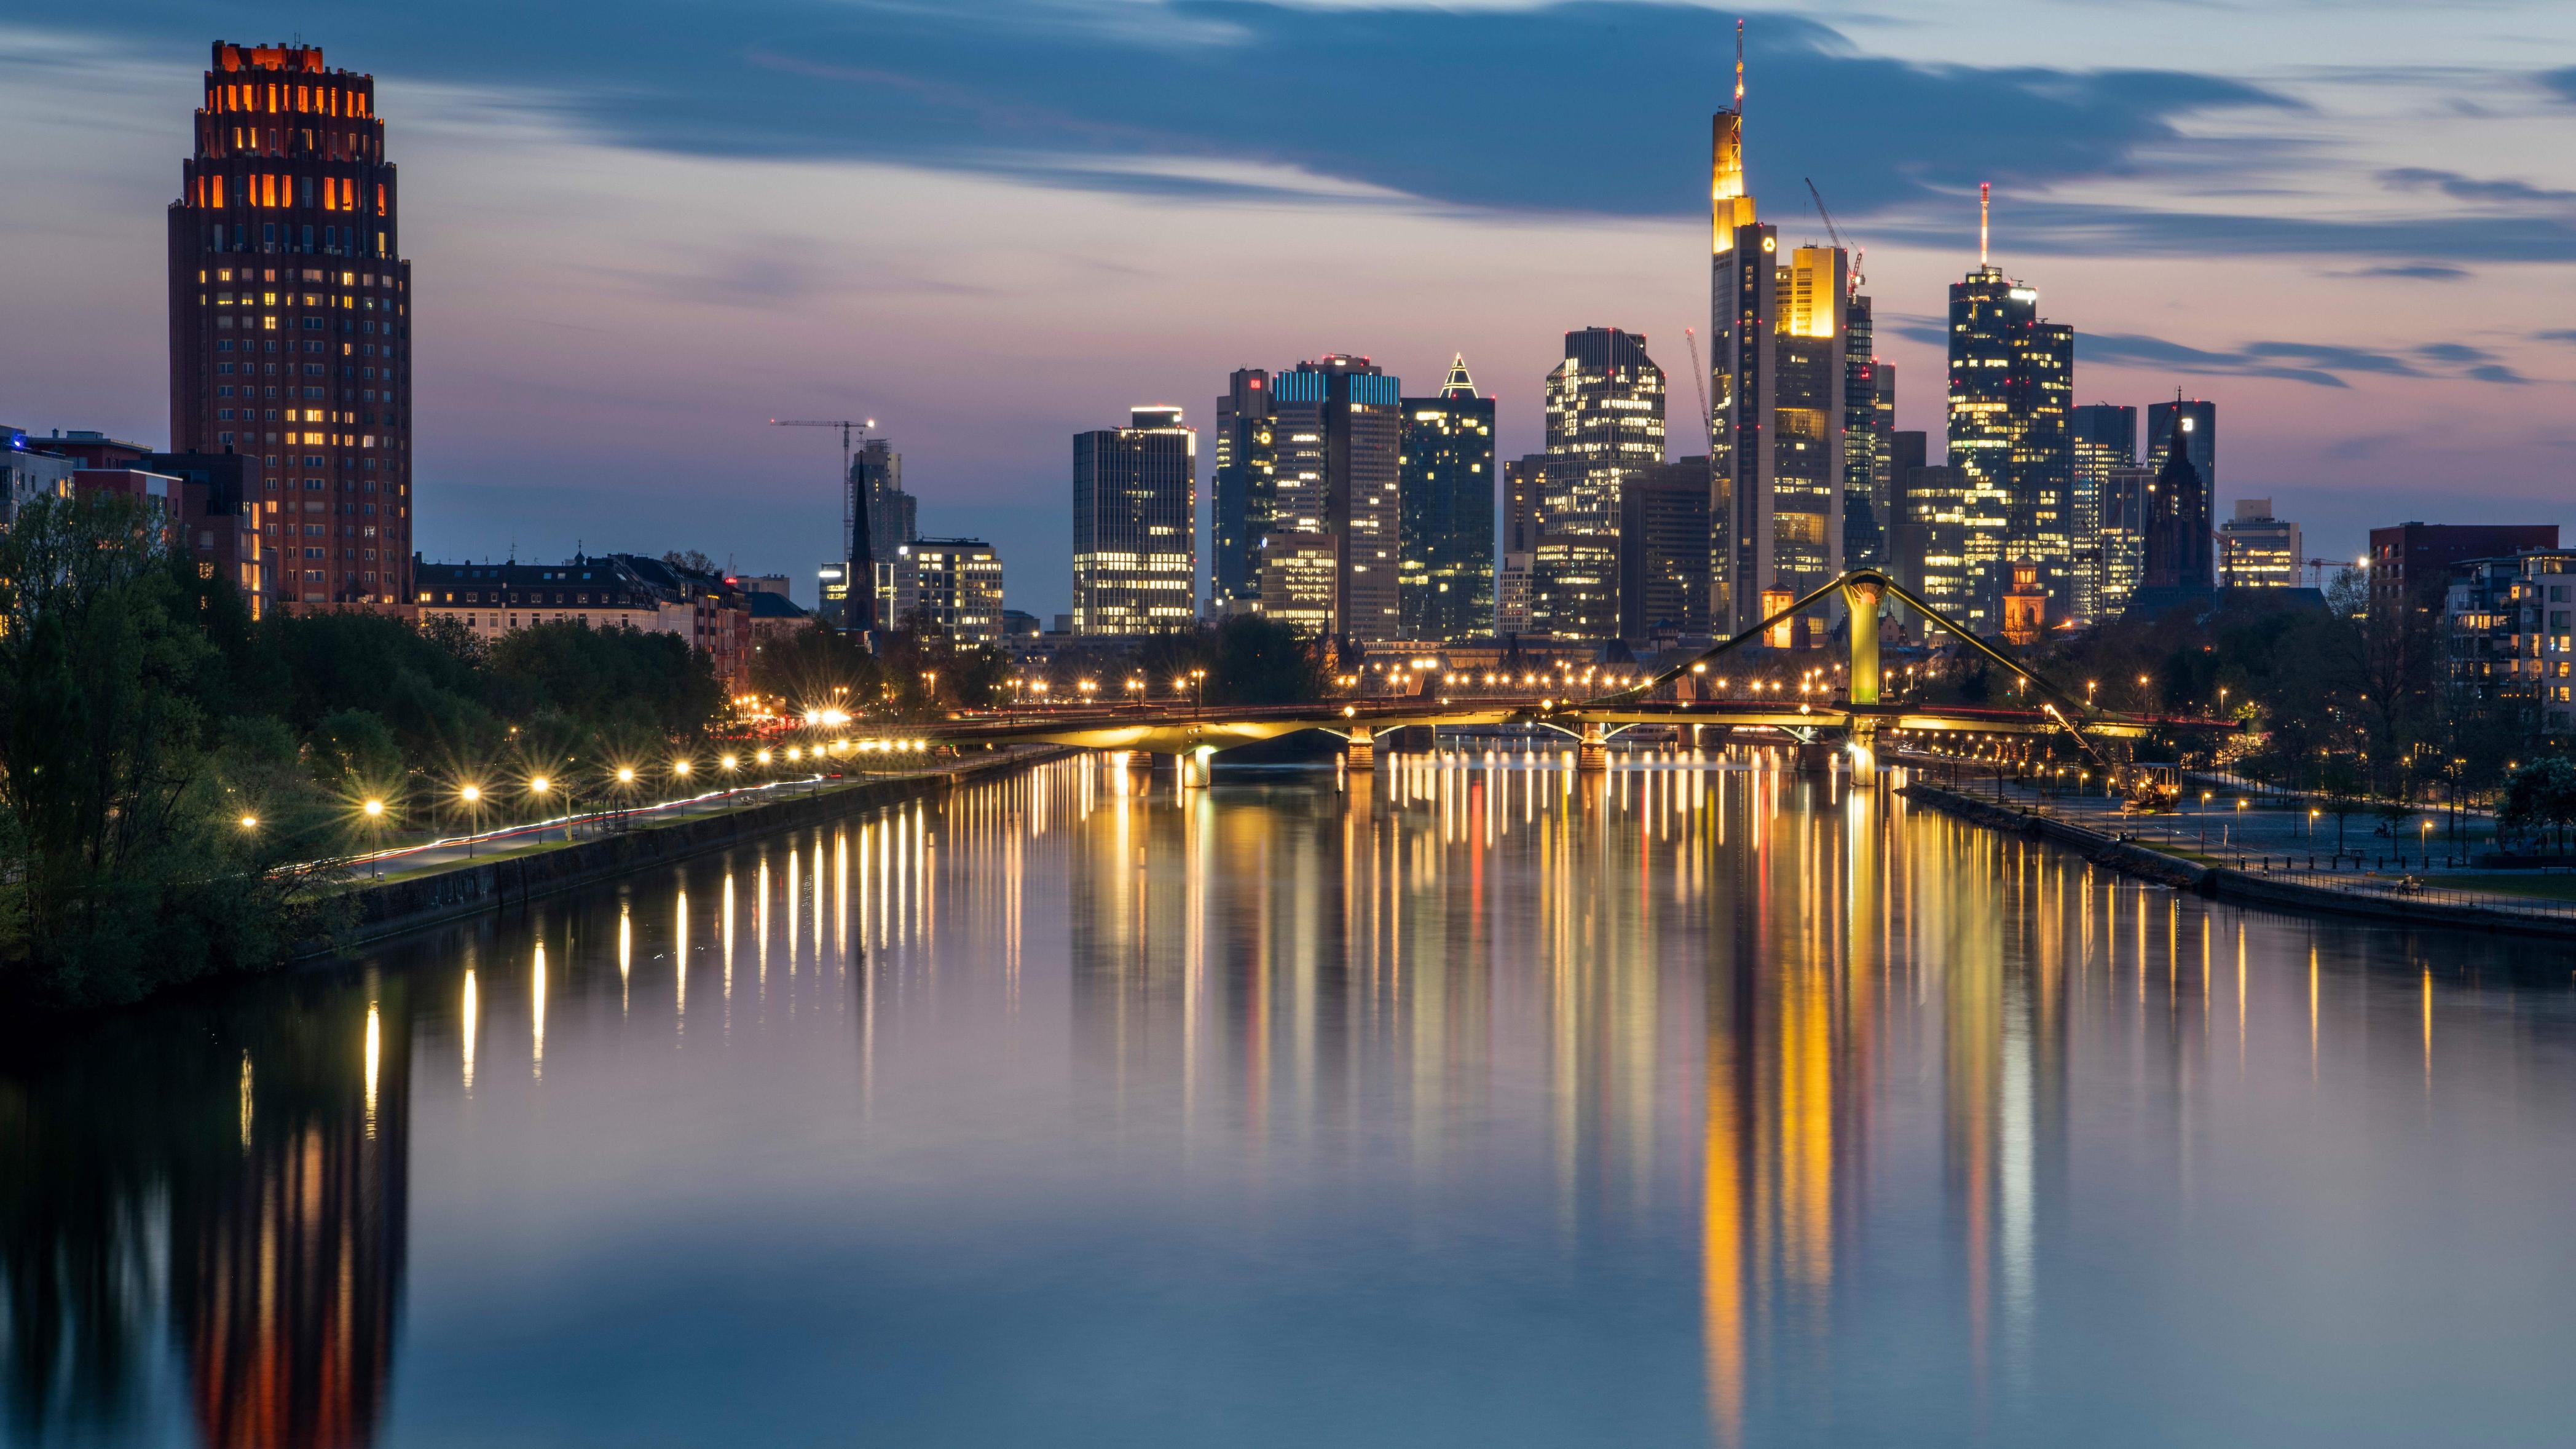 10 best attractions in Frankfurt, Germany | CNN Travel